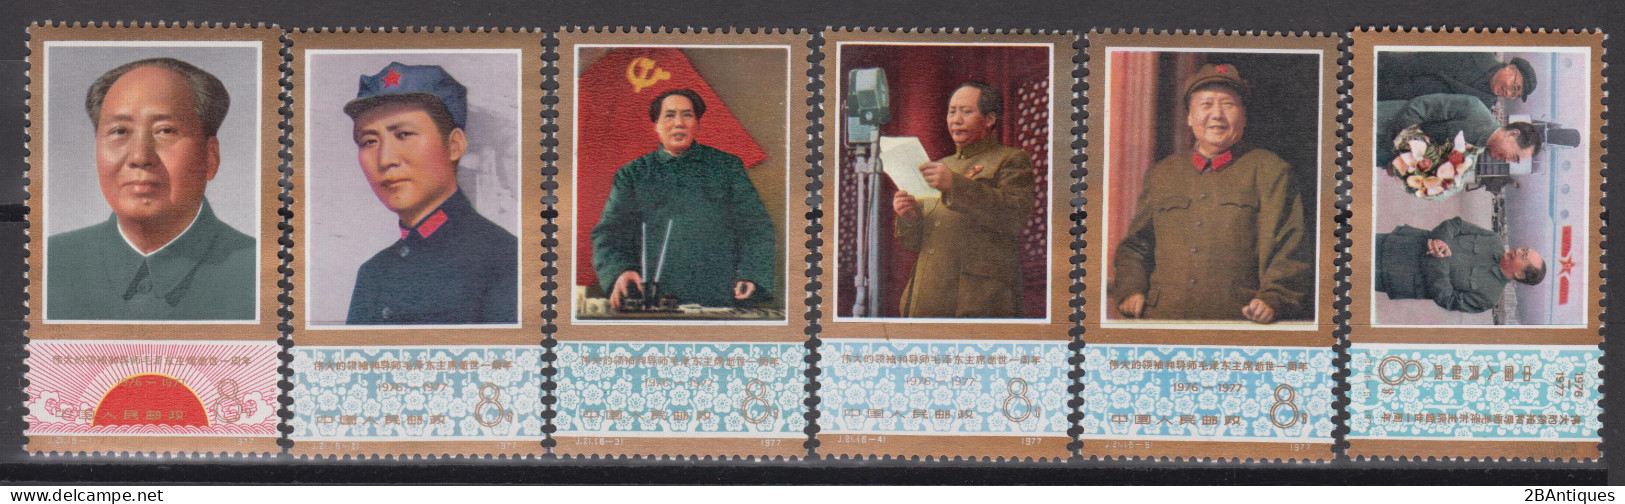 PR CHINA 1977 - The 1st Anniversary Of The Death Of Mao Tse-tung  MNH** OG - Ongebruikt